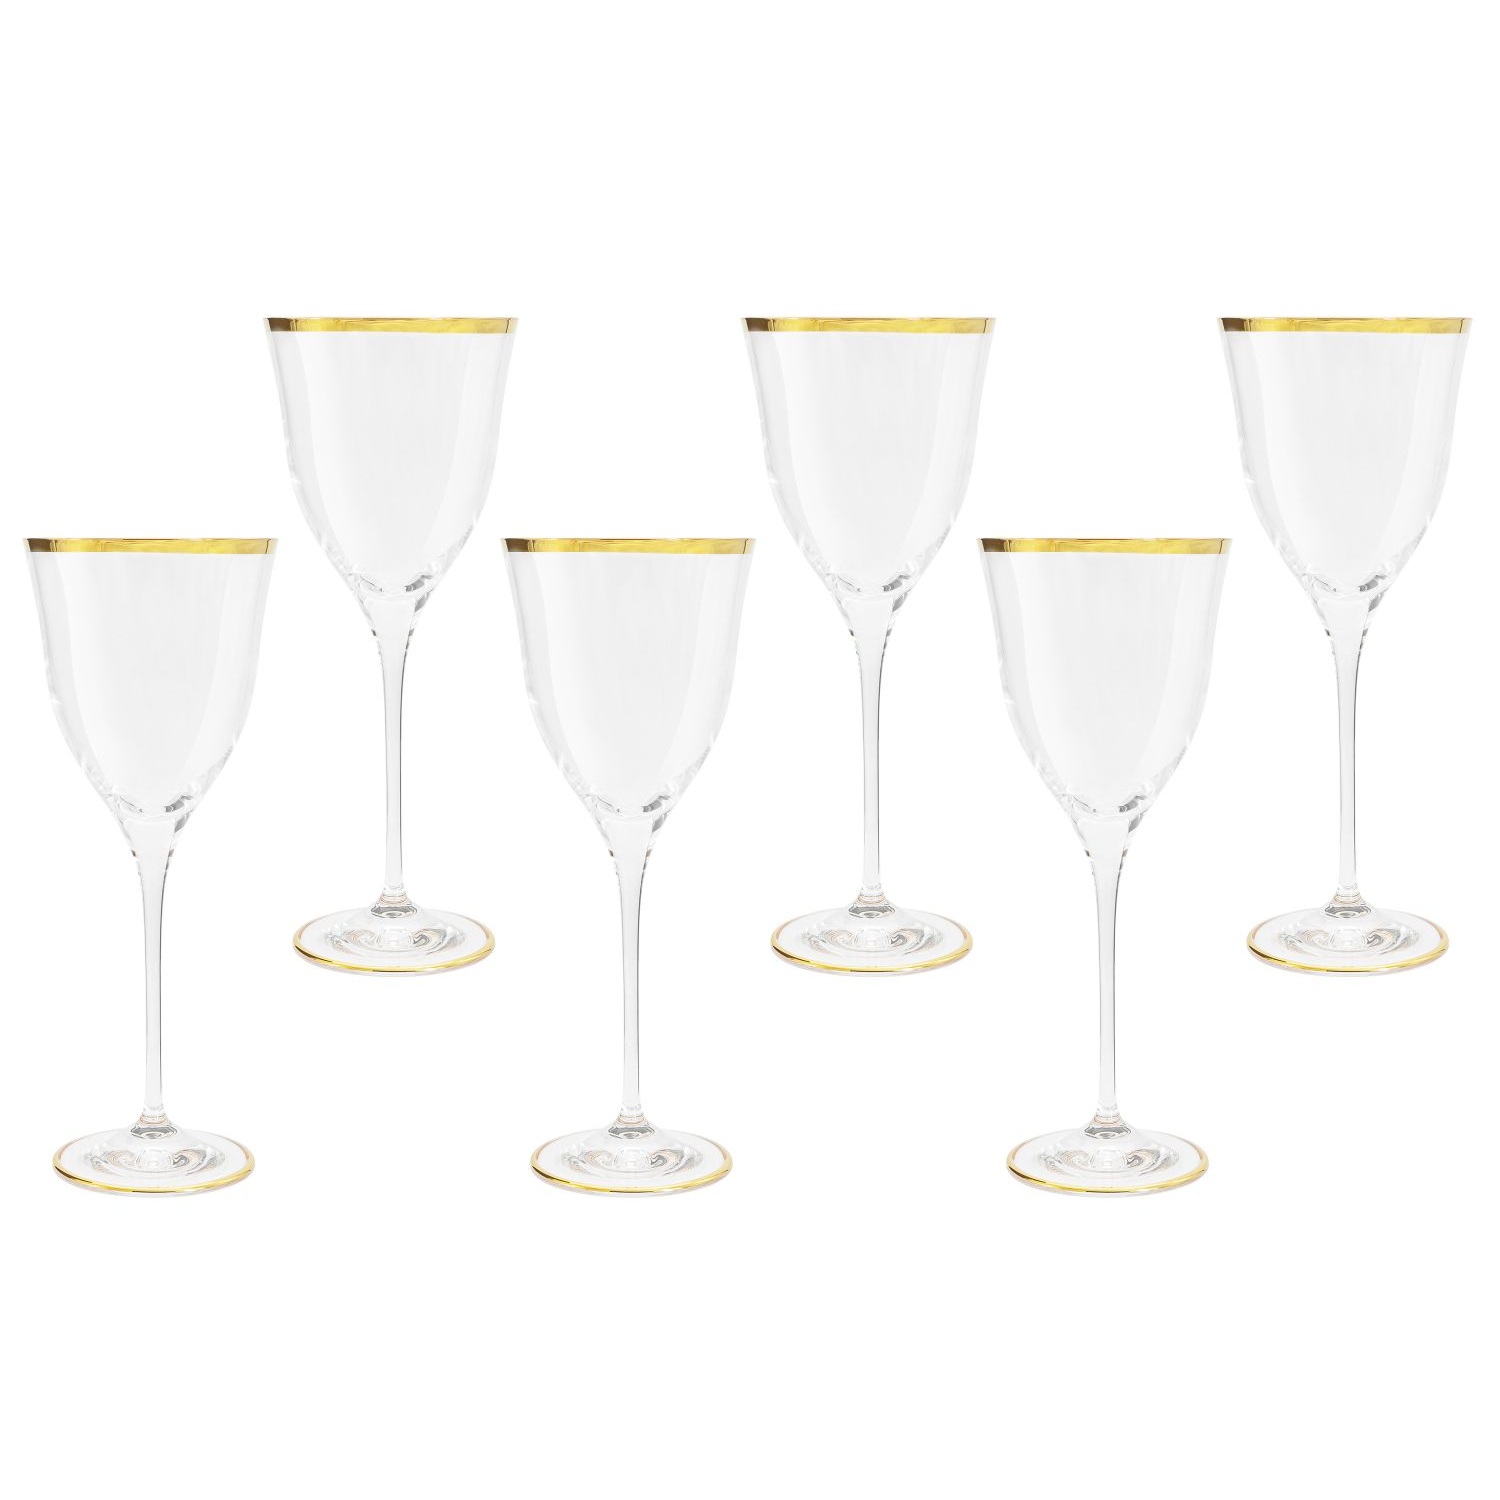 Набор бокалов для вина Same Сабина золото 6 шт набор бокалов для вина same сабина платина 6 шт